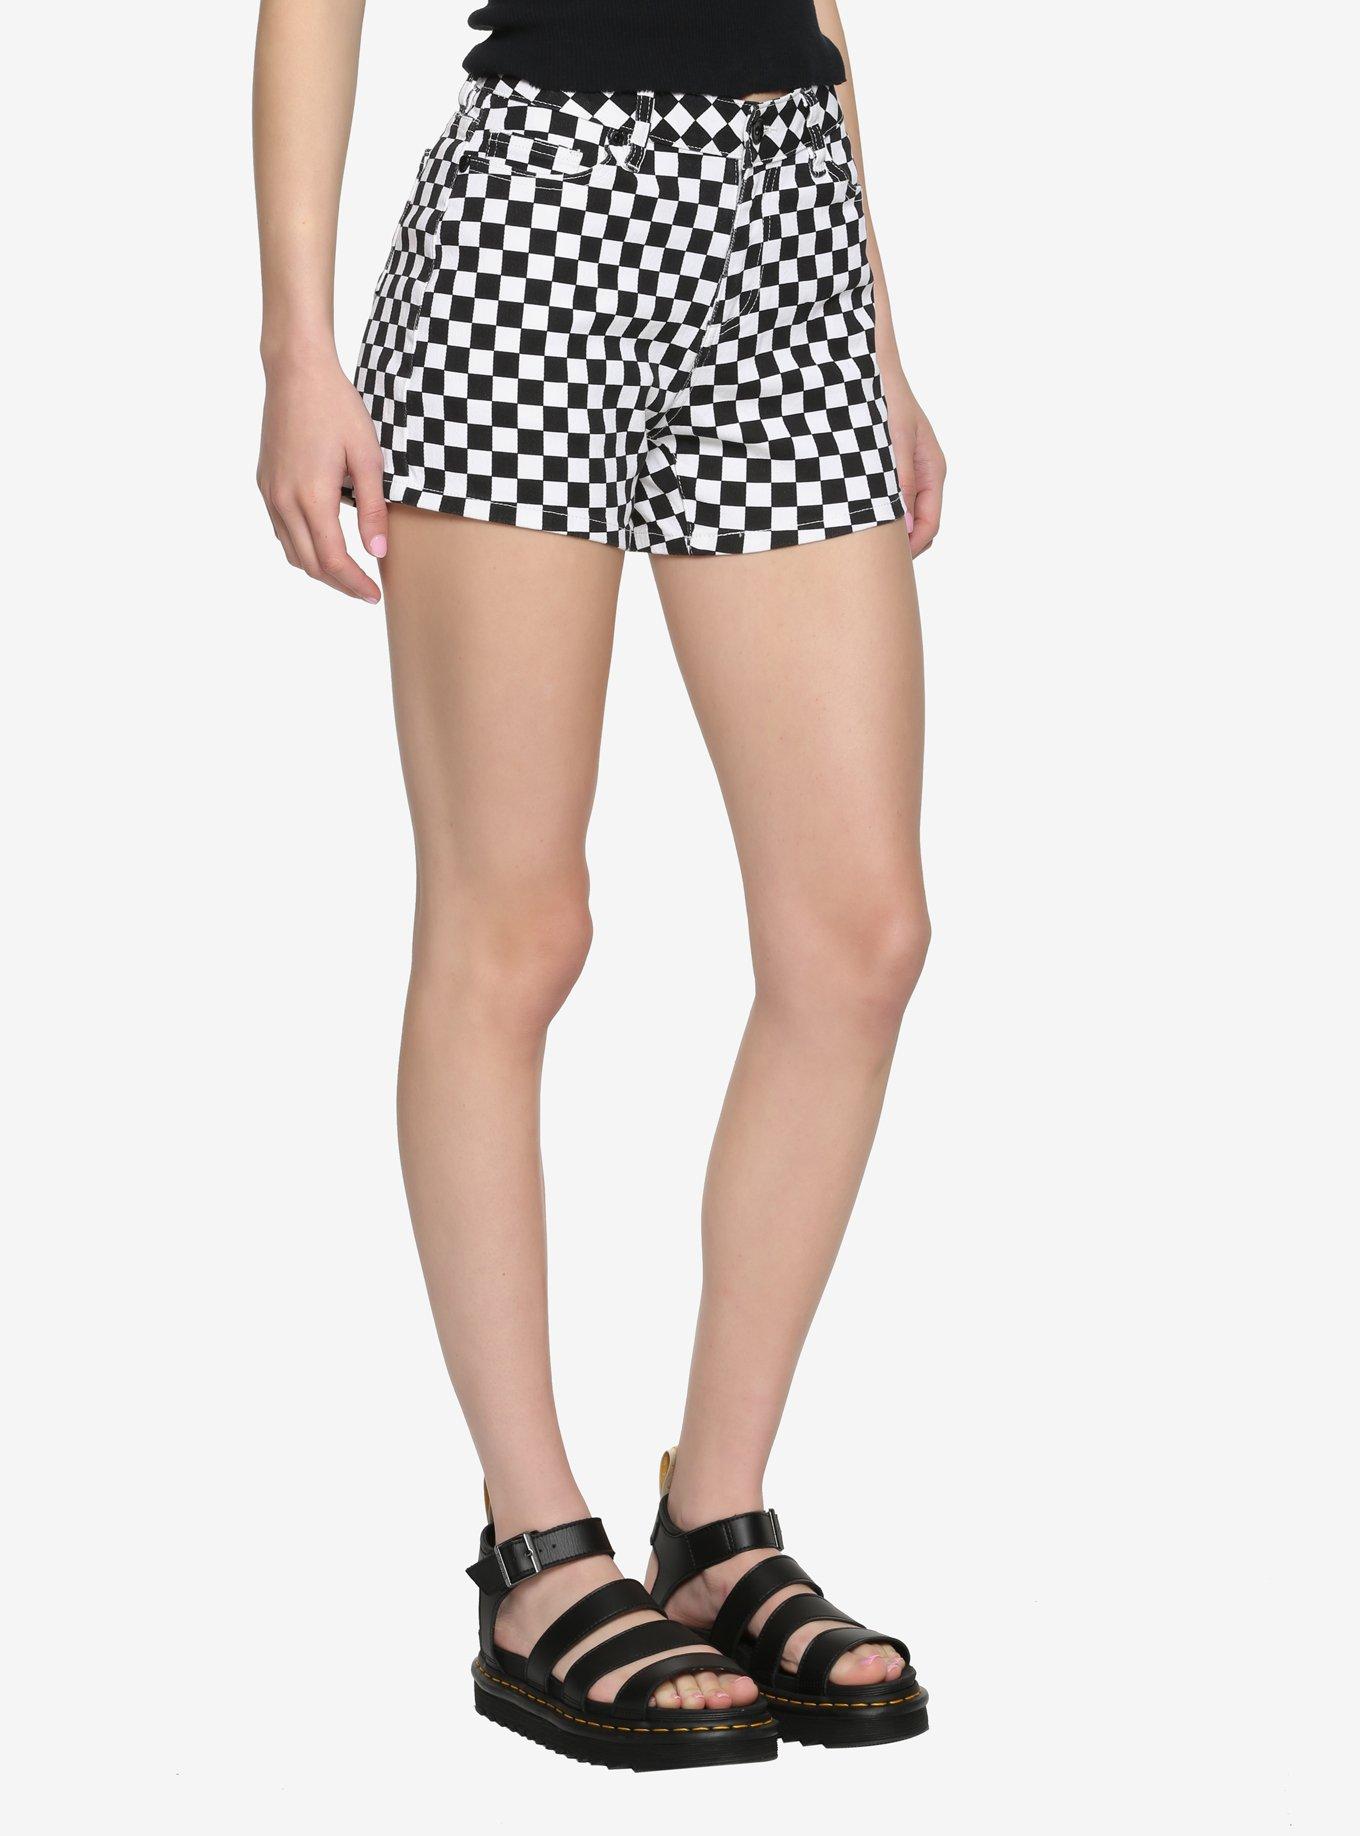 Blackheart Black & White Checkered Skinny Shorts, MULTI, hi-res